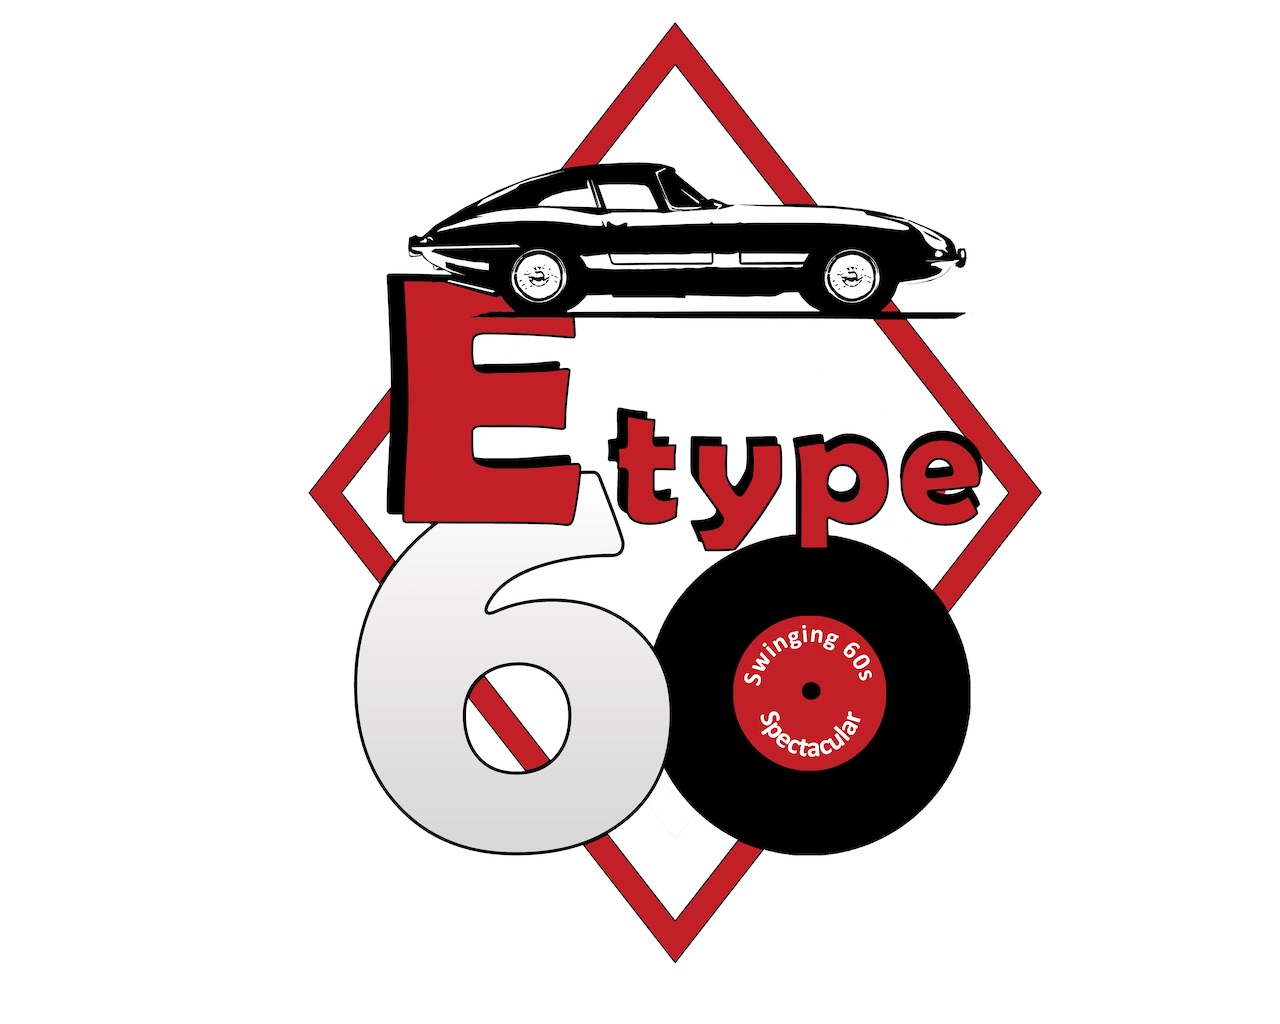 Mini Cooper 60th Anniversary set for E-type 60 Shelsley Walsh